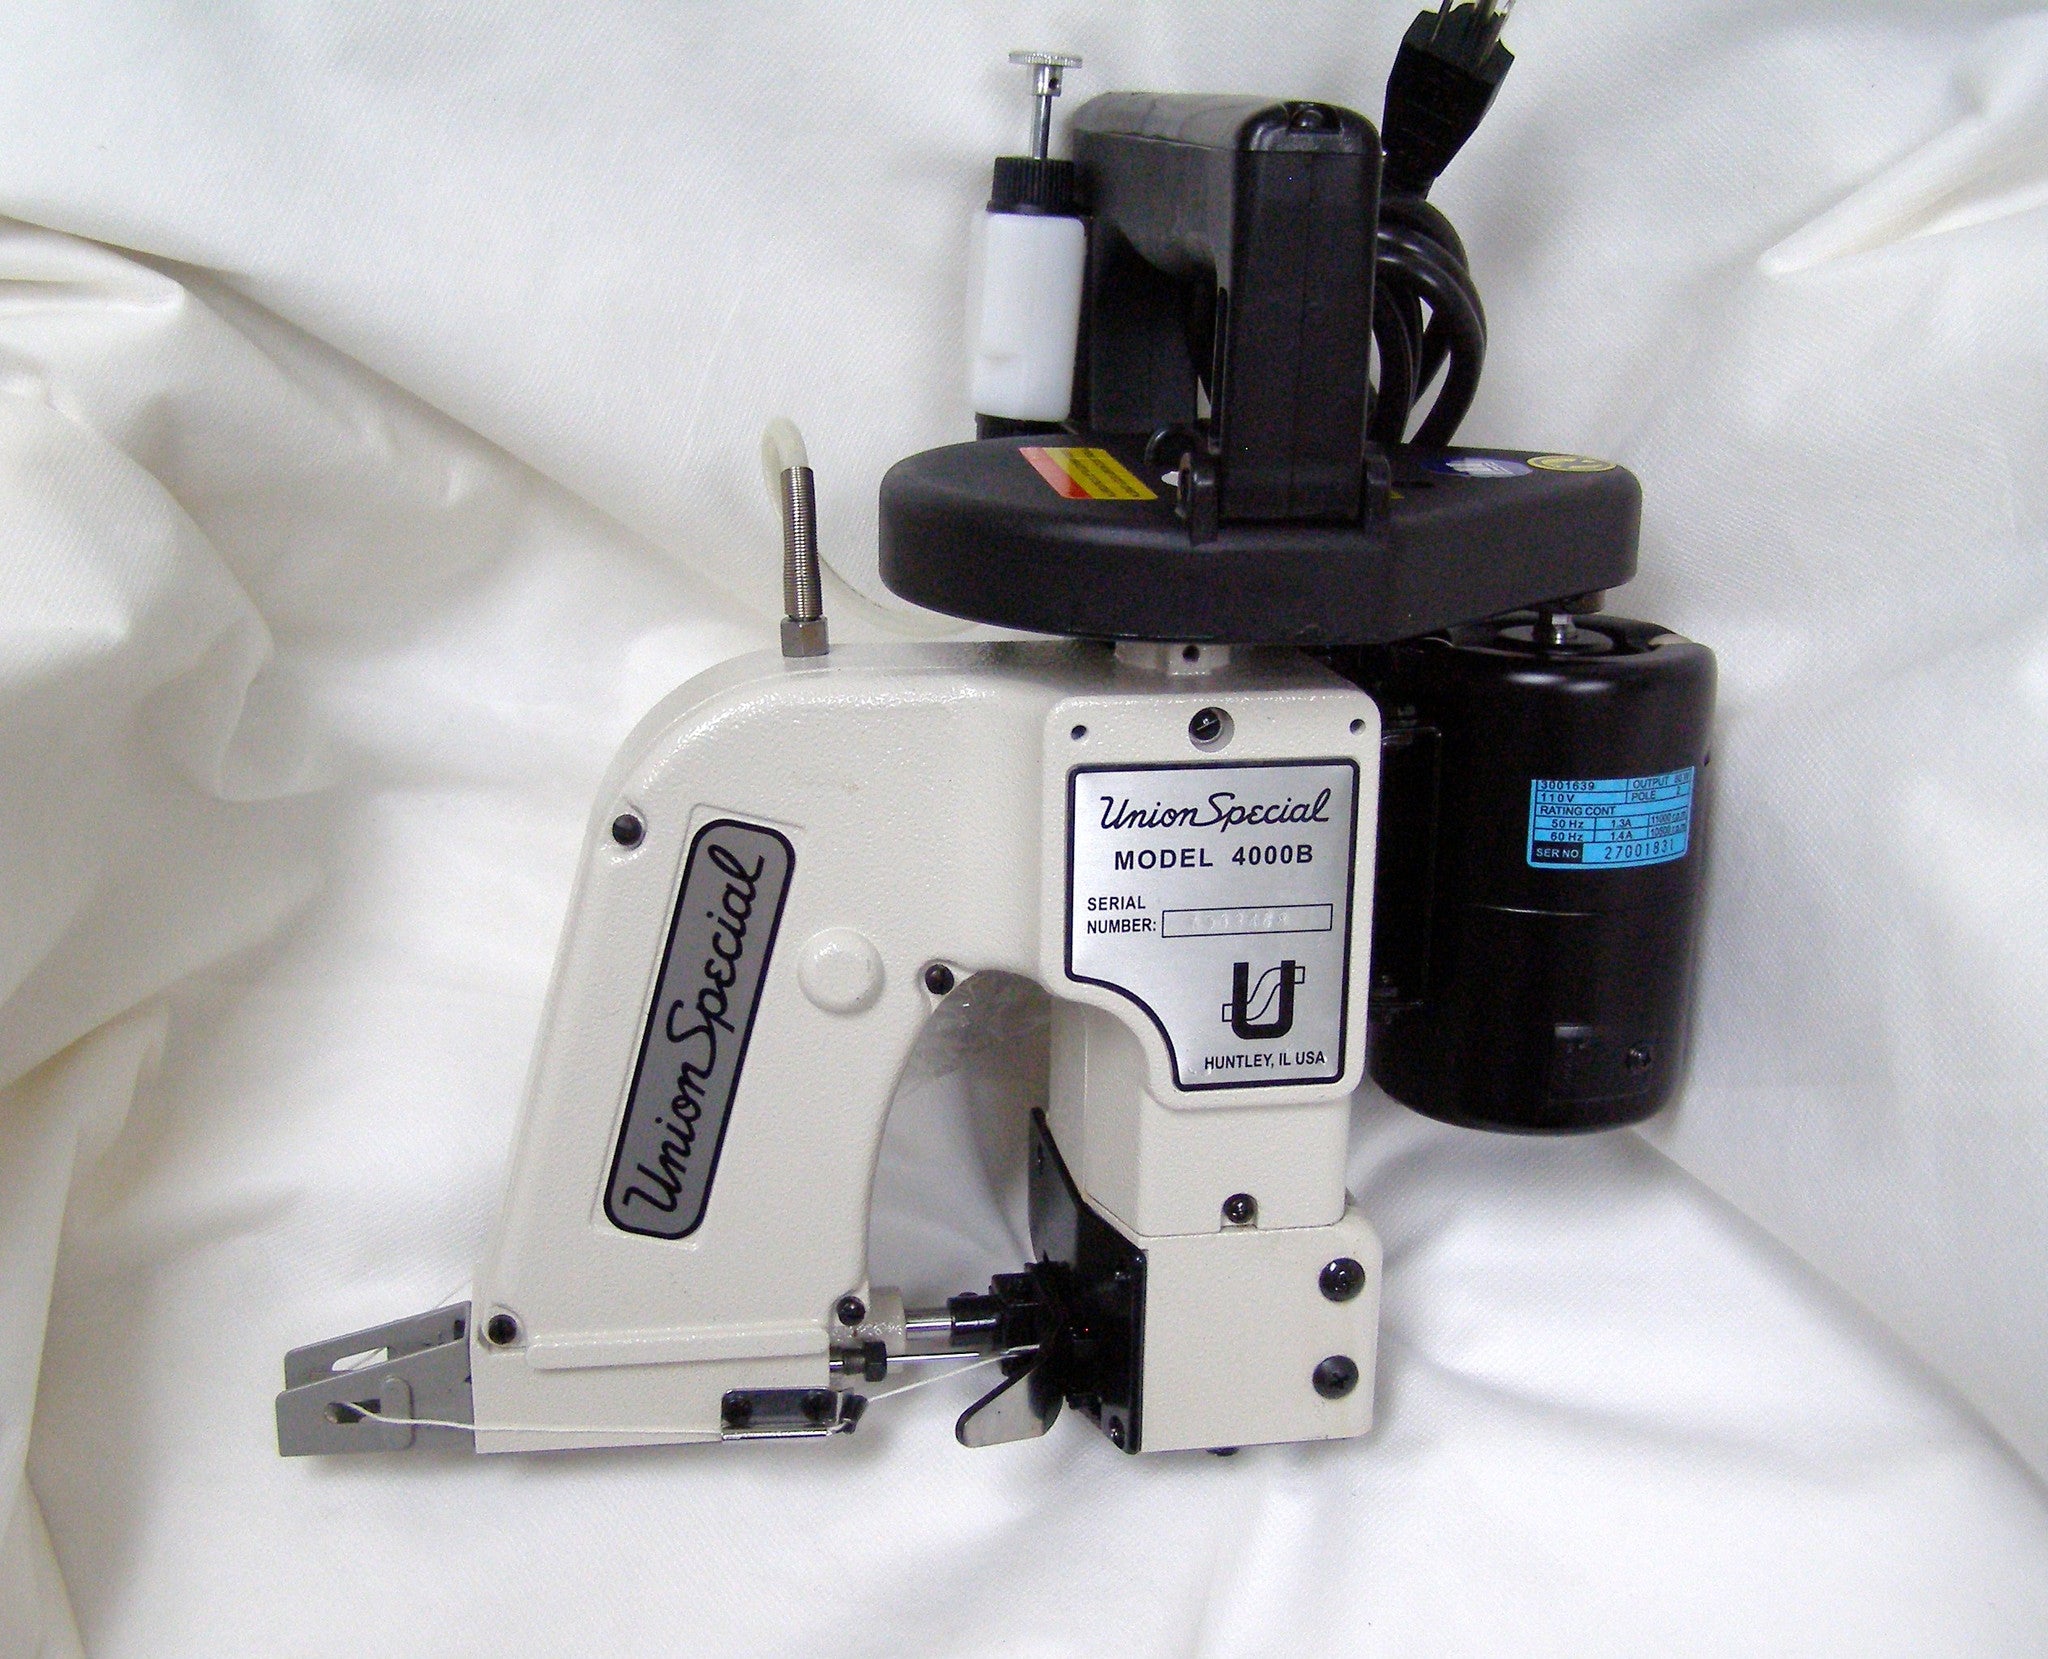 BOND Portable Bag Closer Sewing Machine - Bond Products Inc